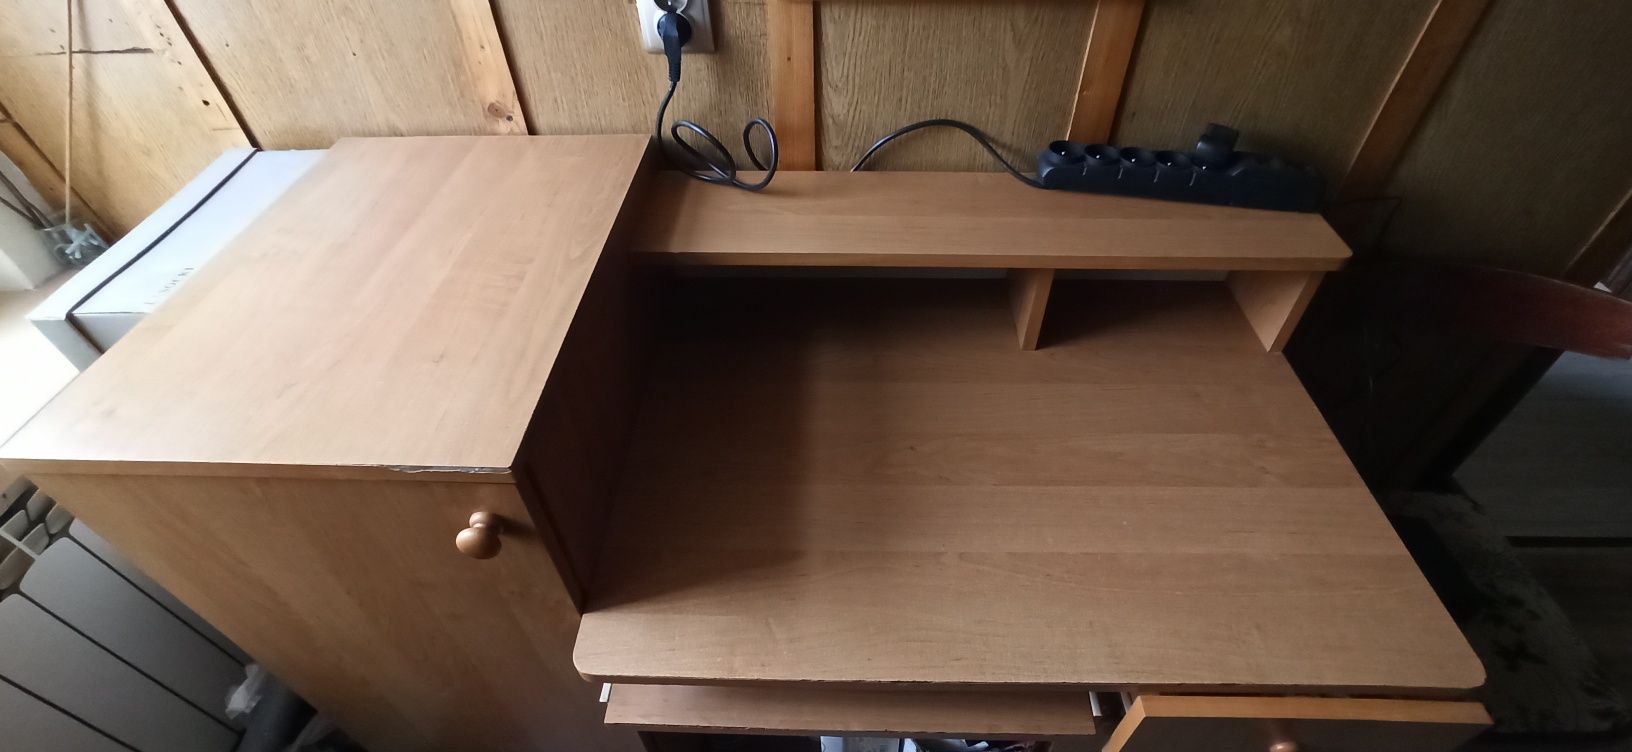 Solidne, duże biurko